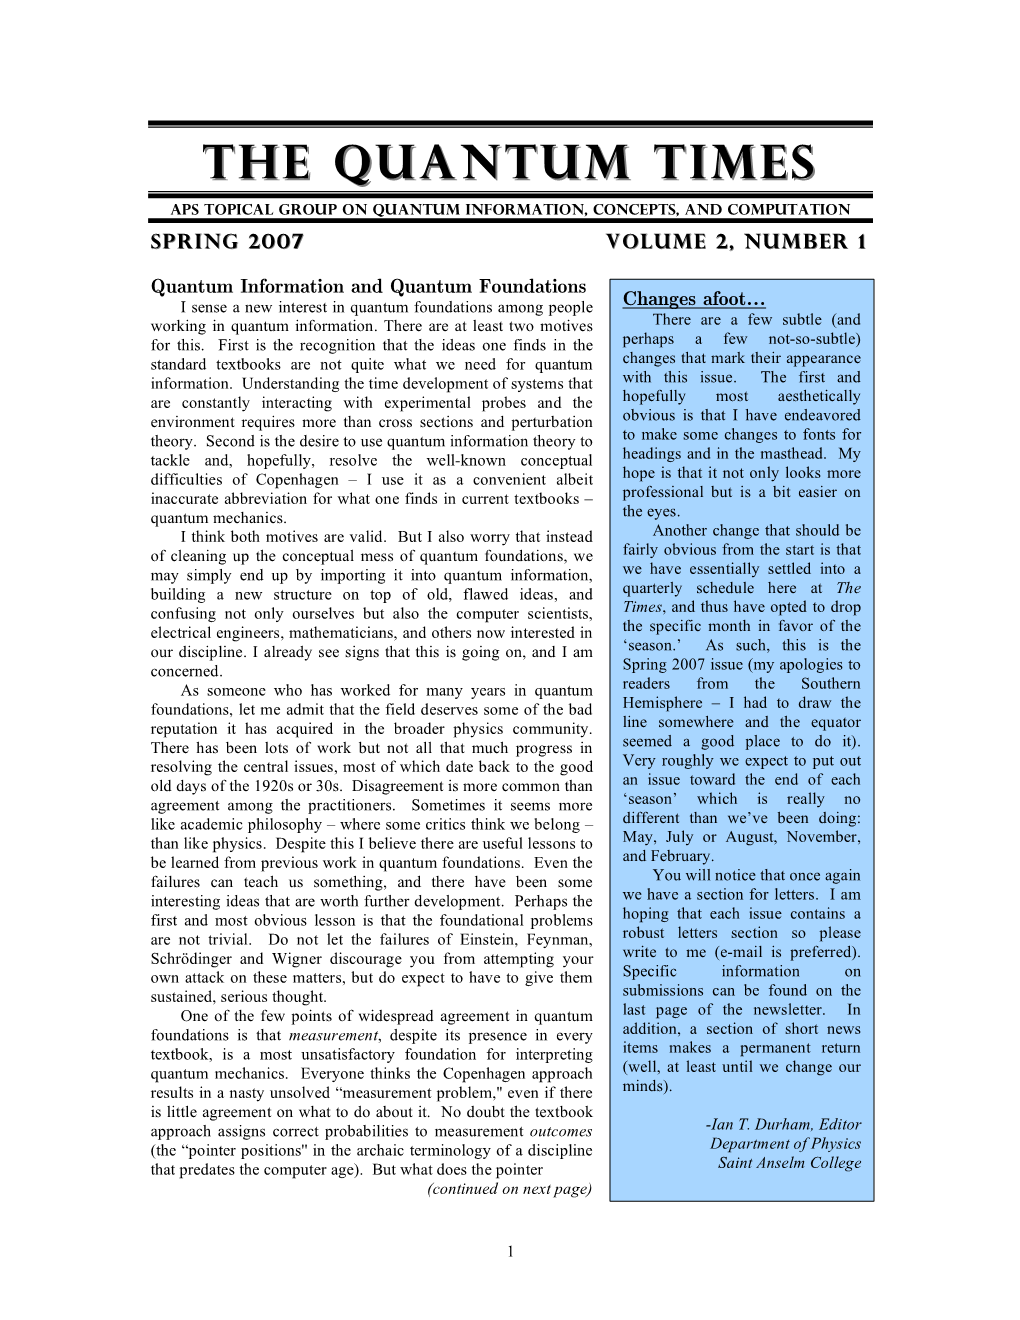 The Quantum Times